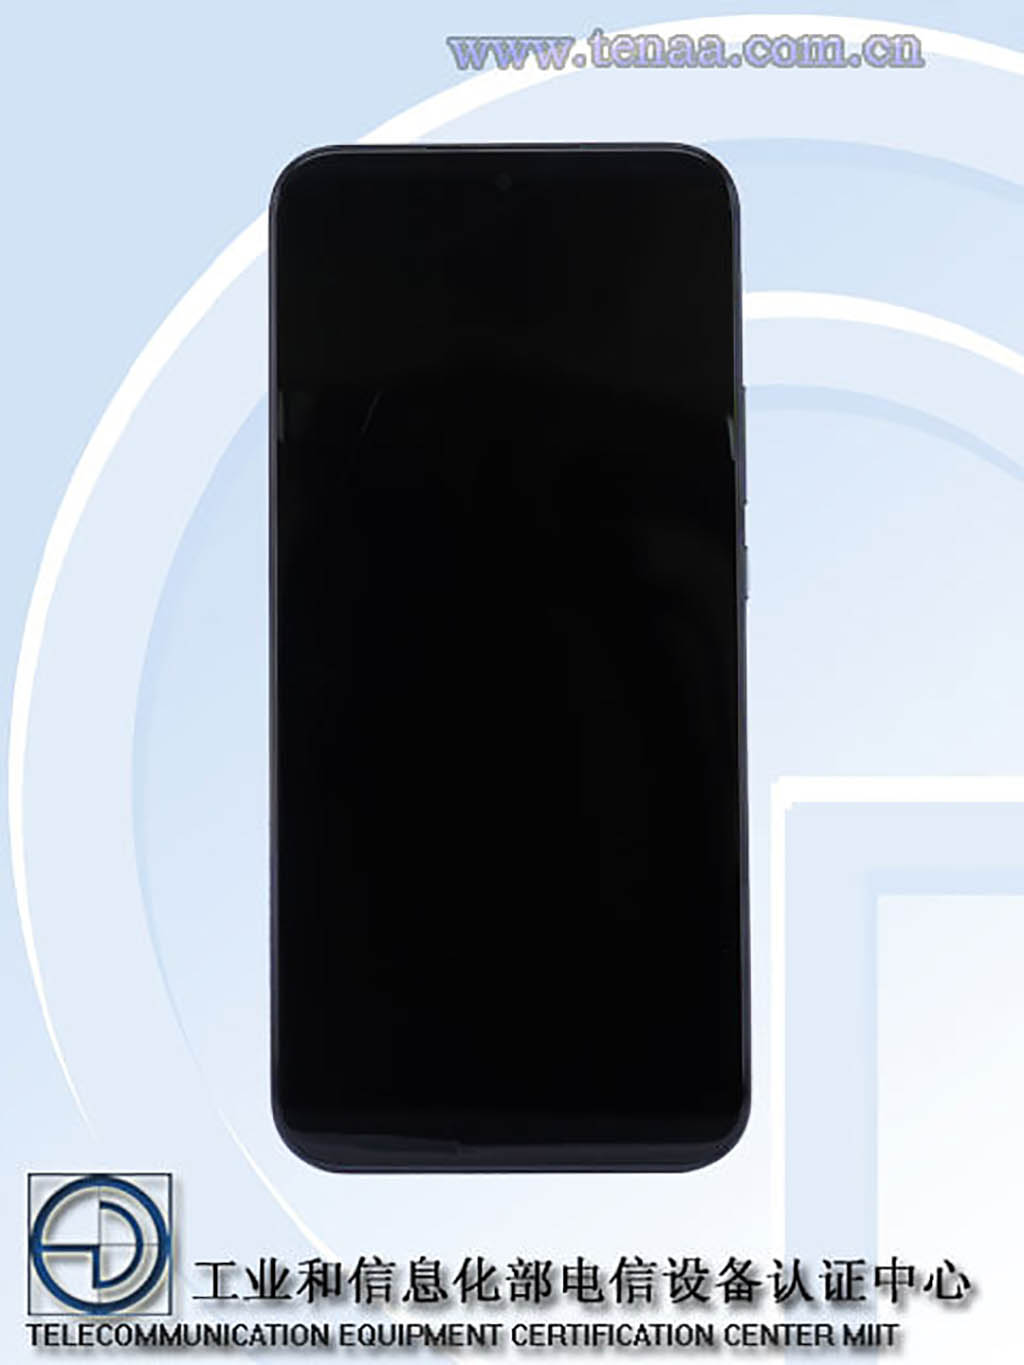 Huawei FIN-AL60A phone TENAA design